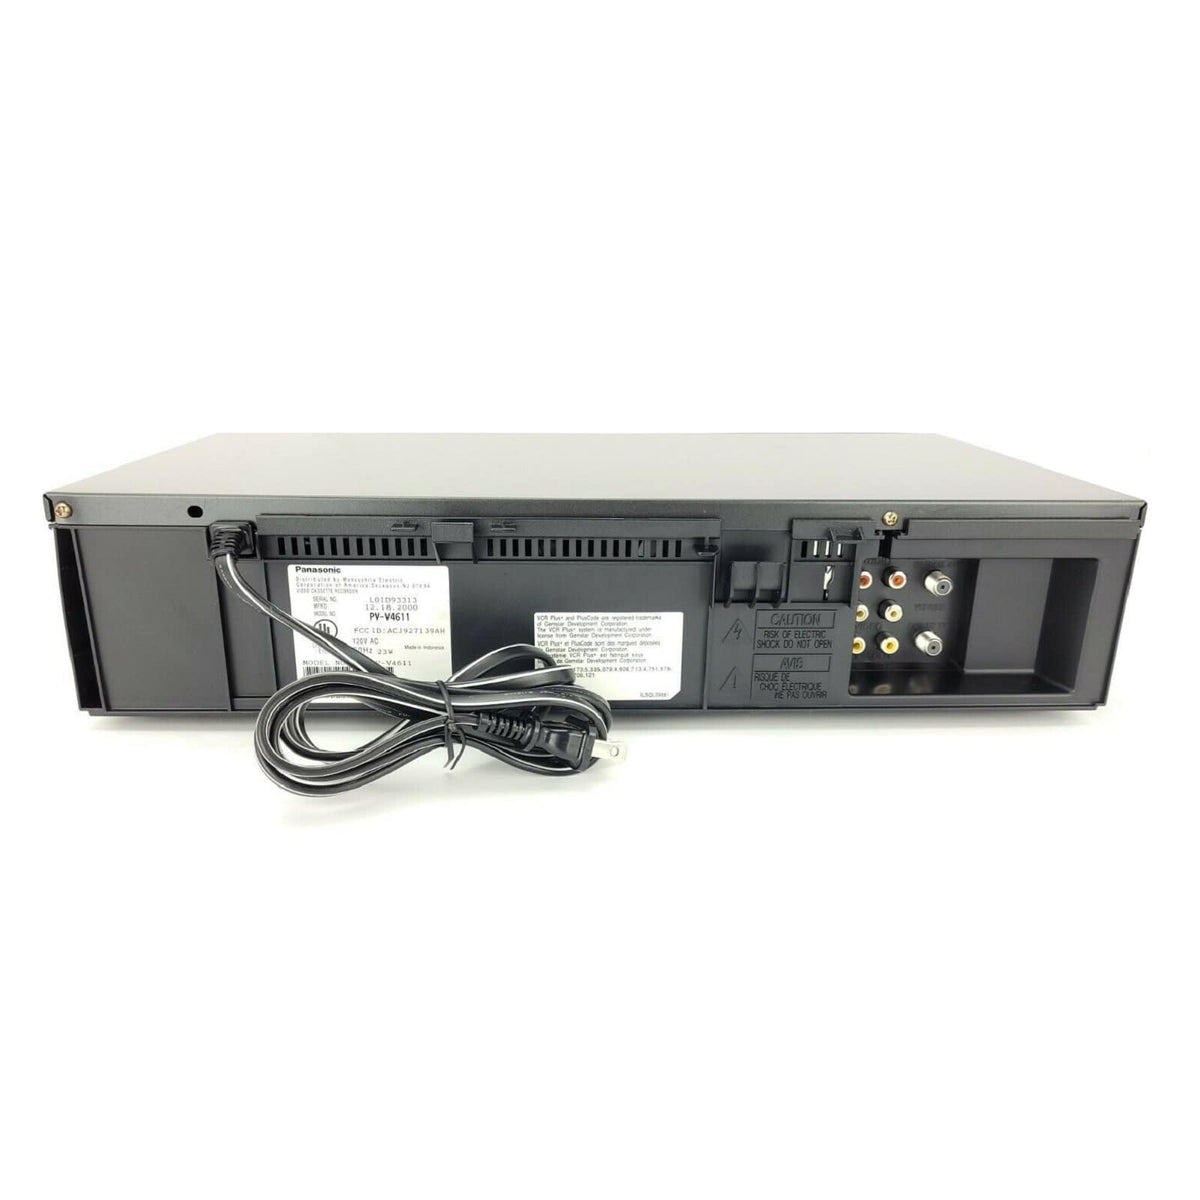 Panasonic VCR 4-Head Hi-Fi Stereo Player PV-V4611